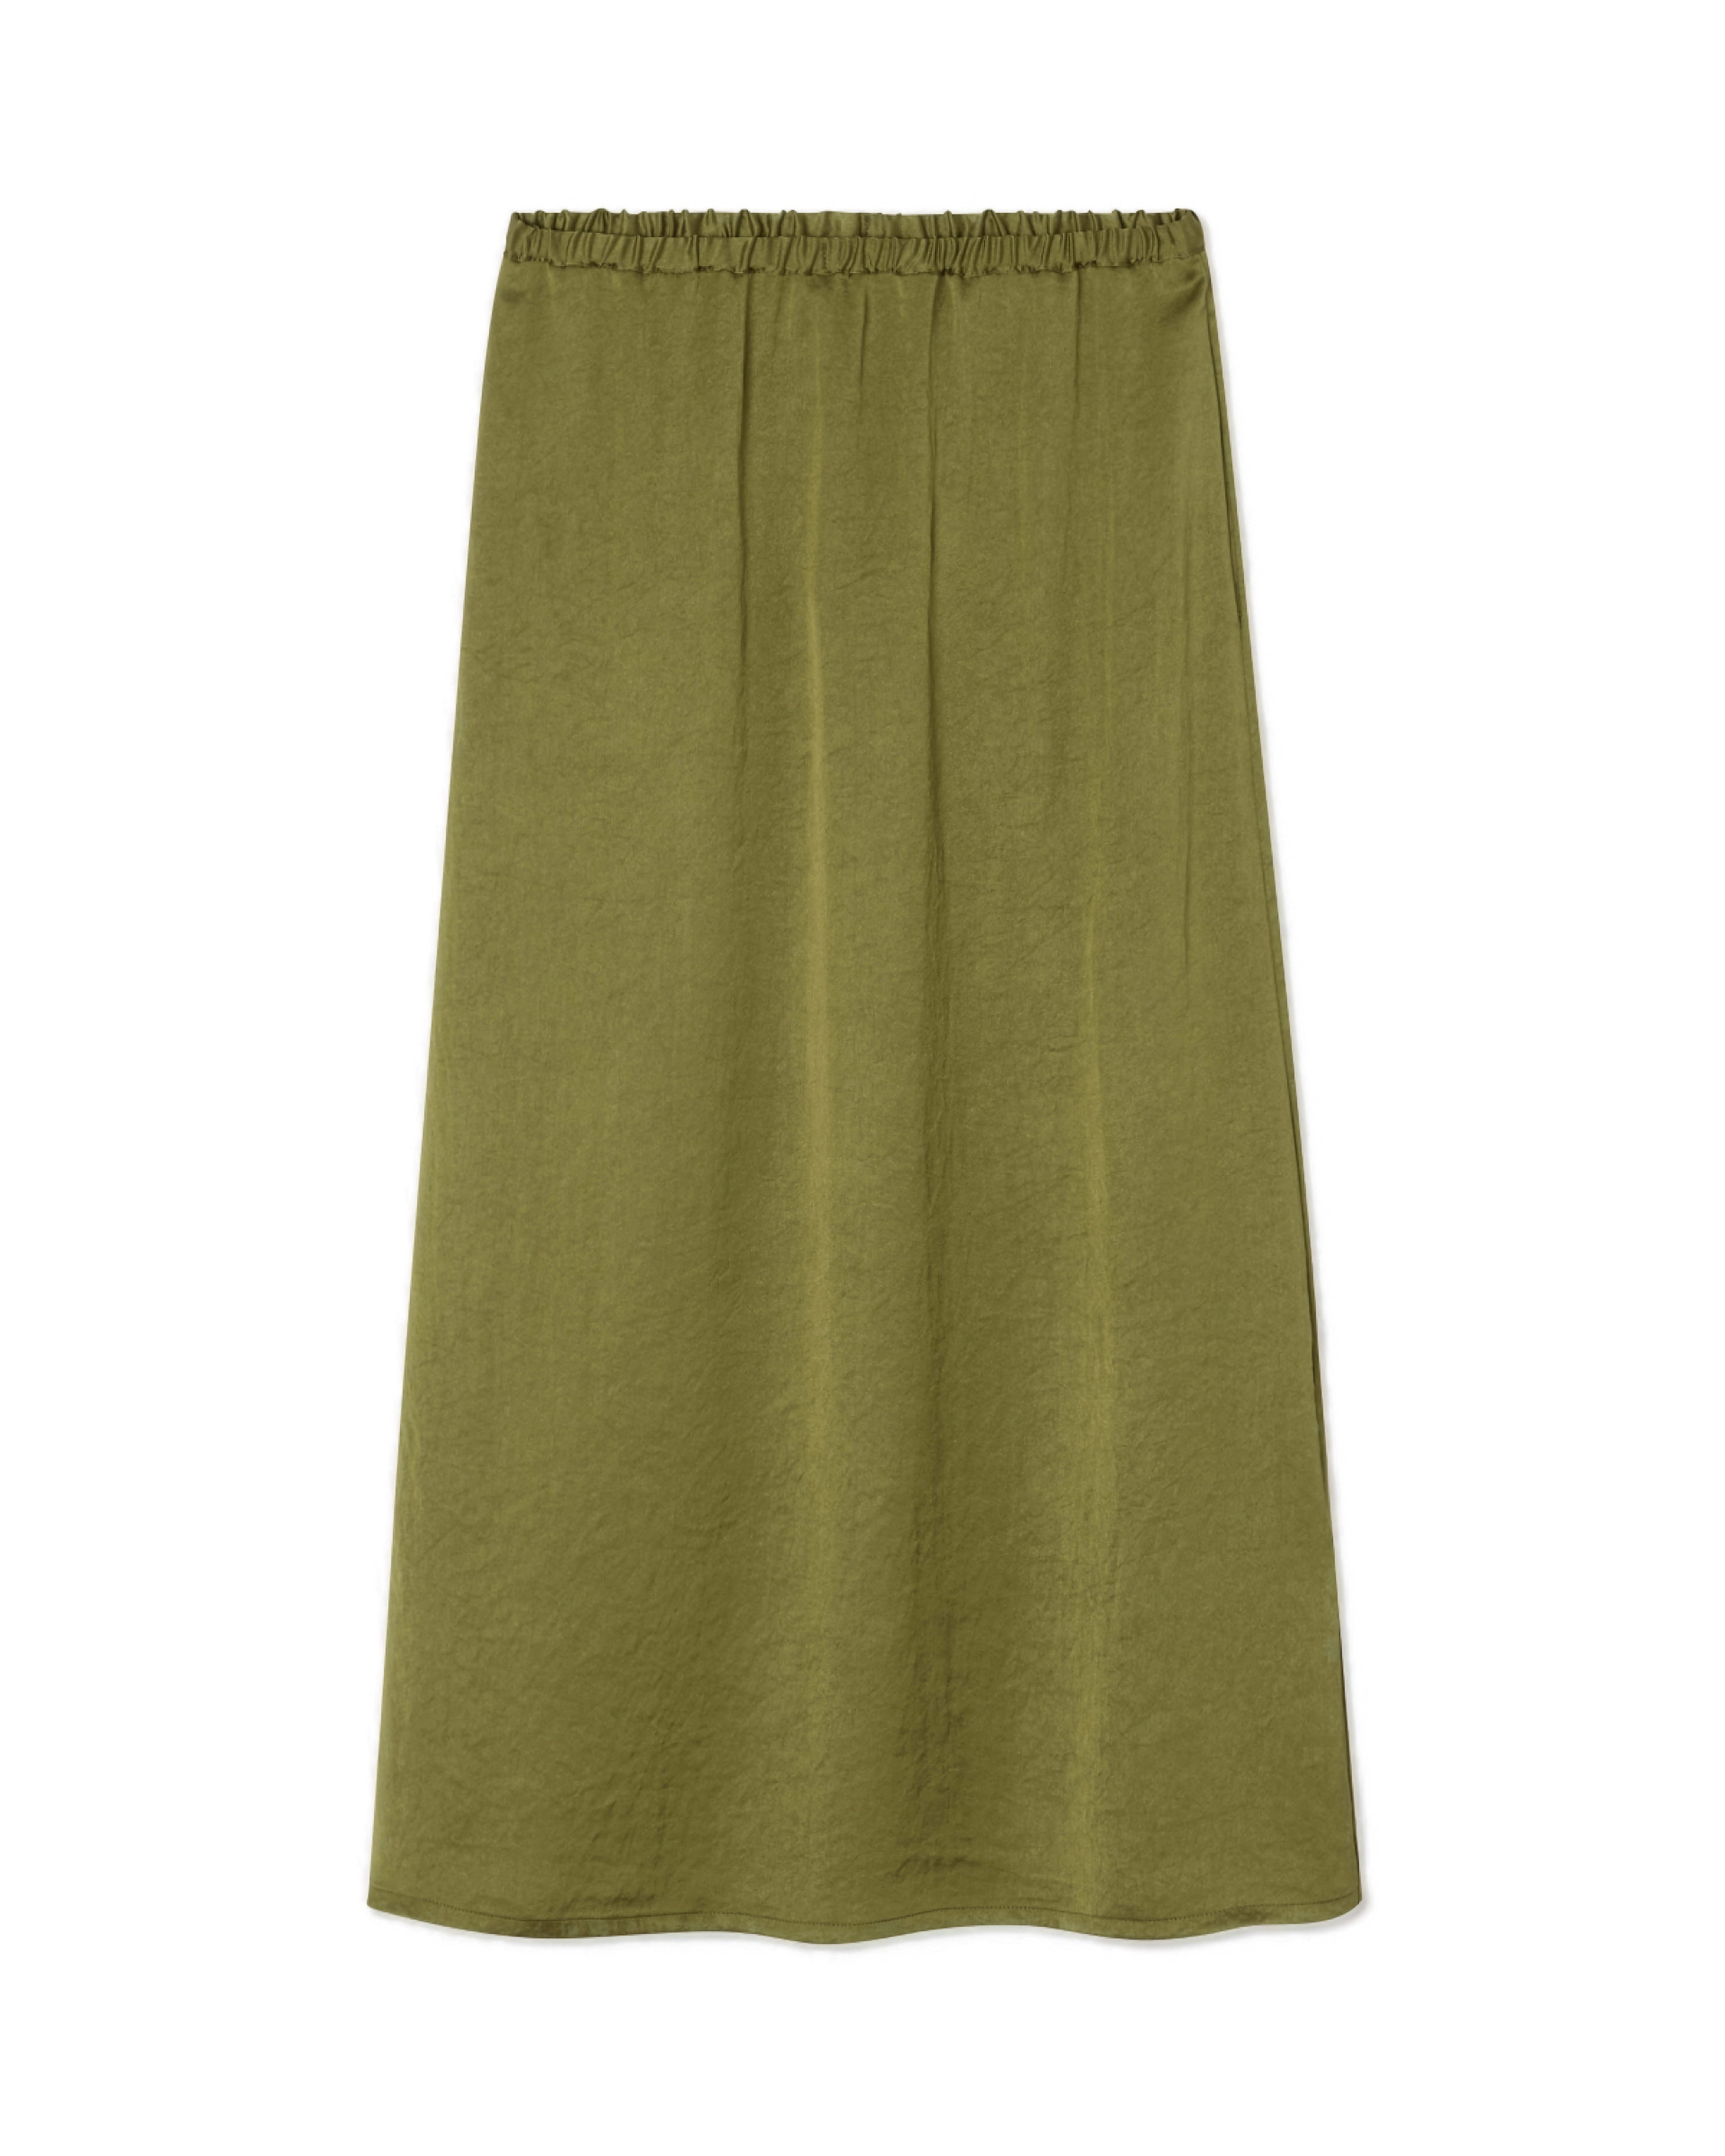 Widland Skirt - Thyme